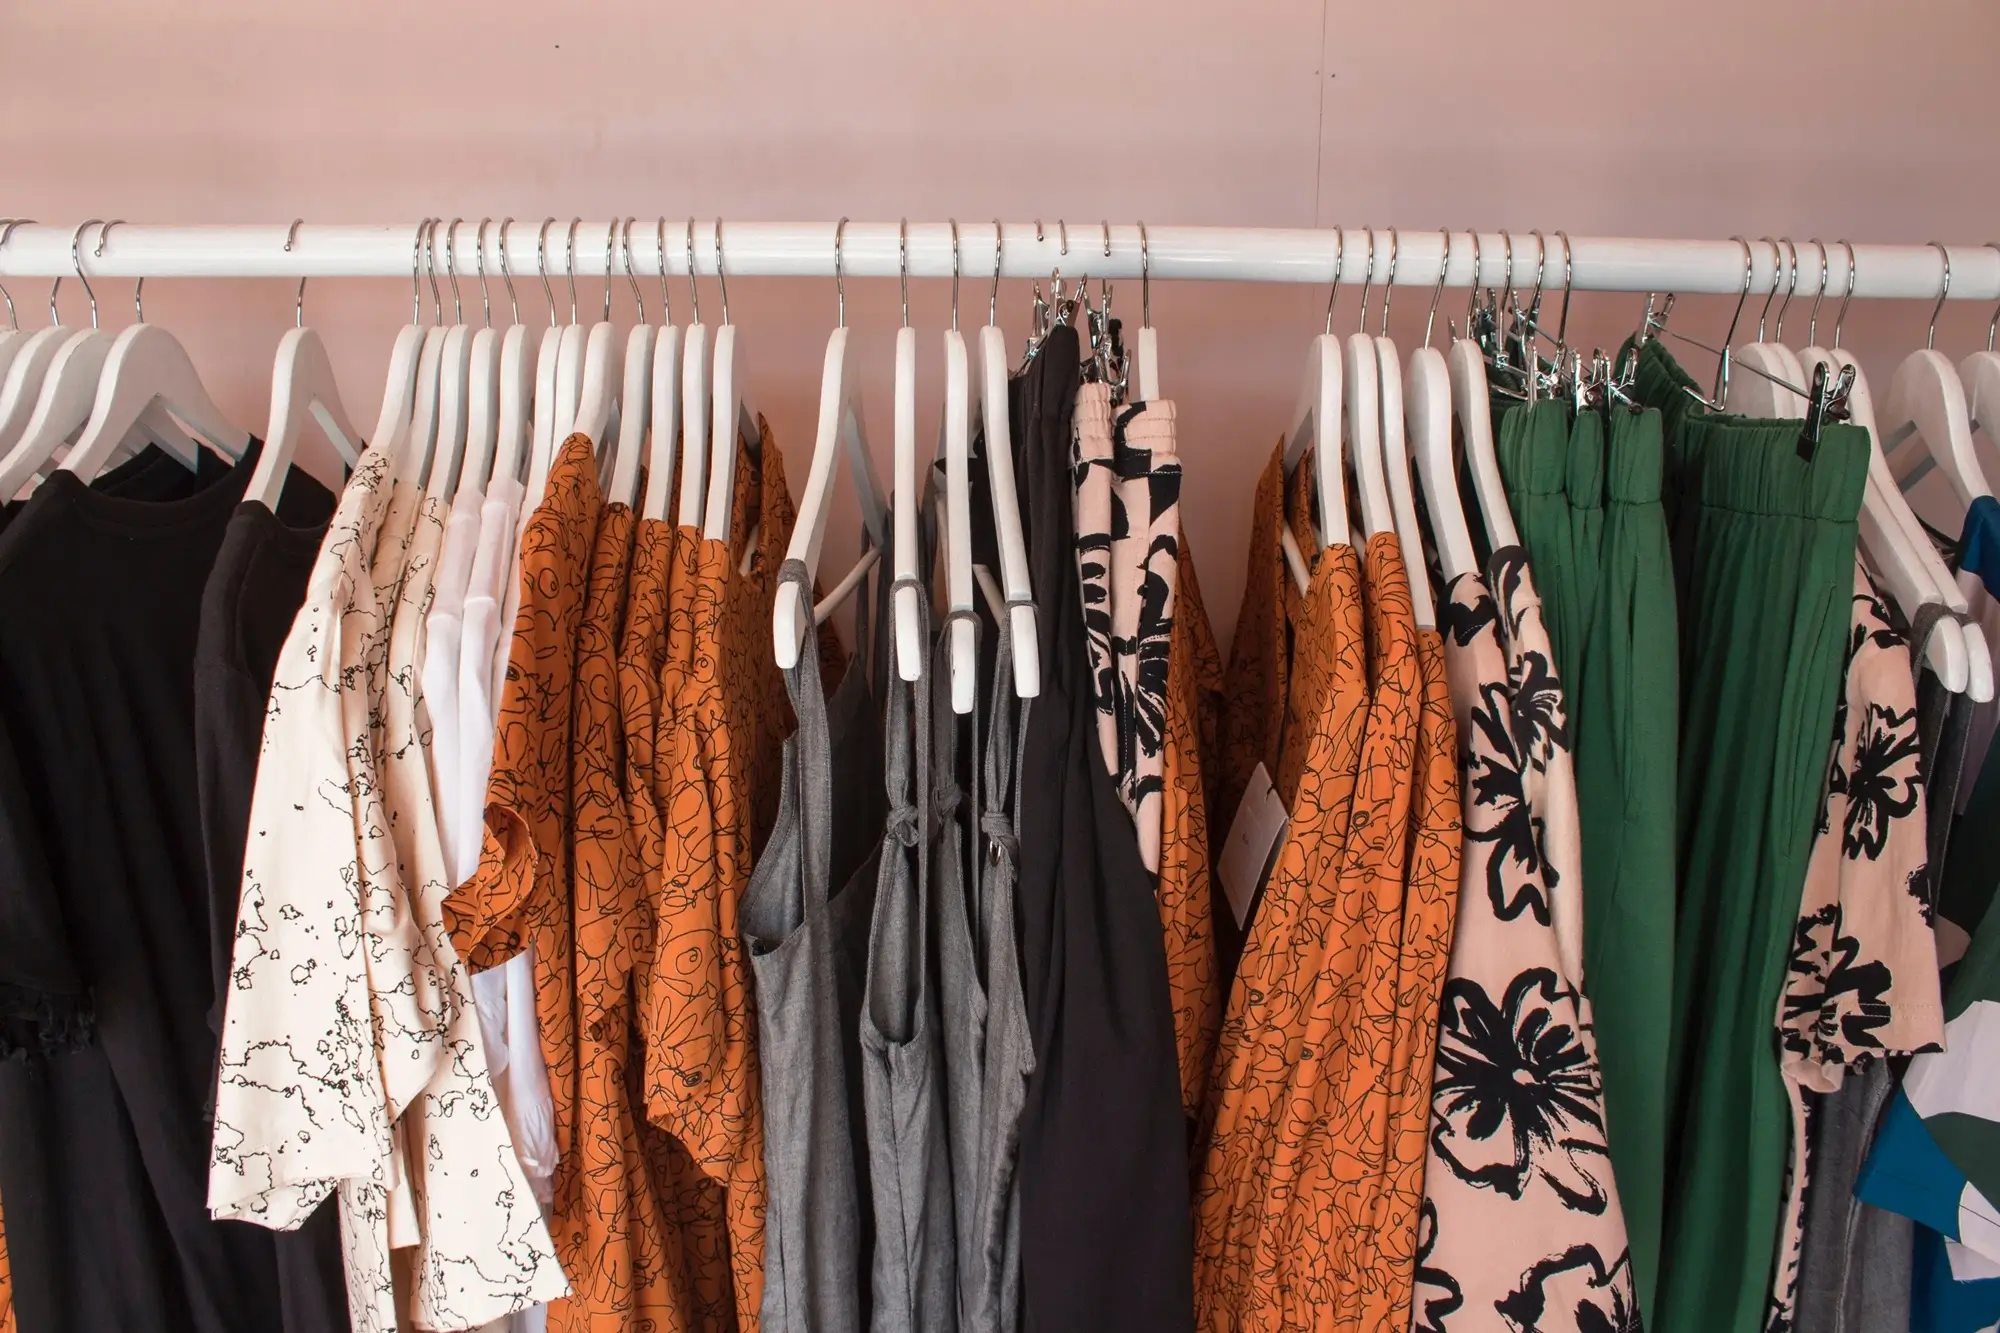 A line of clothes inside a dress shop, representing the concept of permanent establishment.